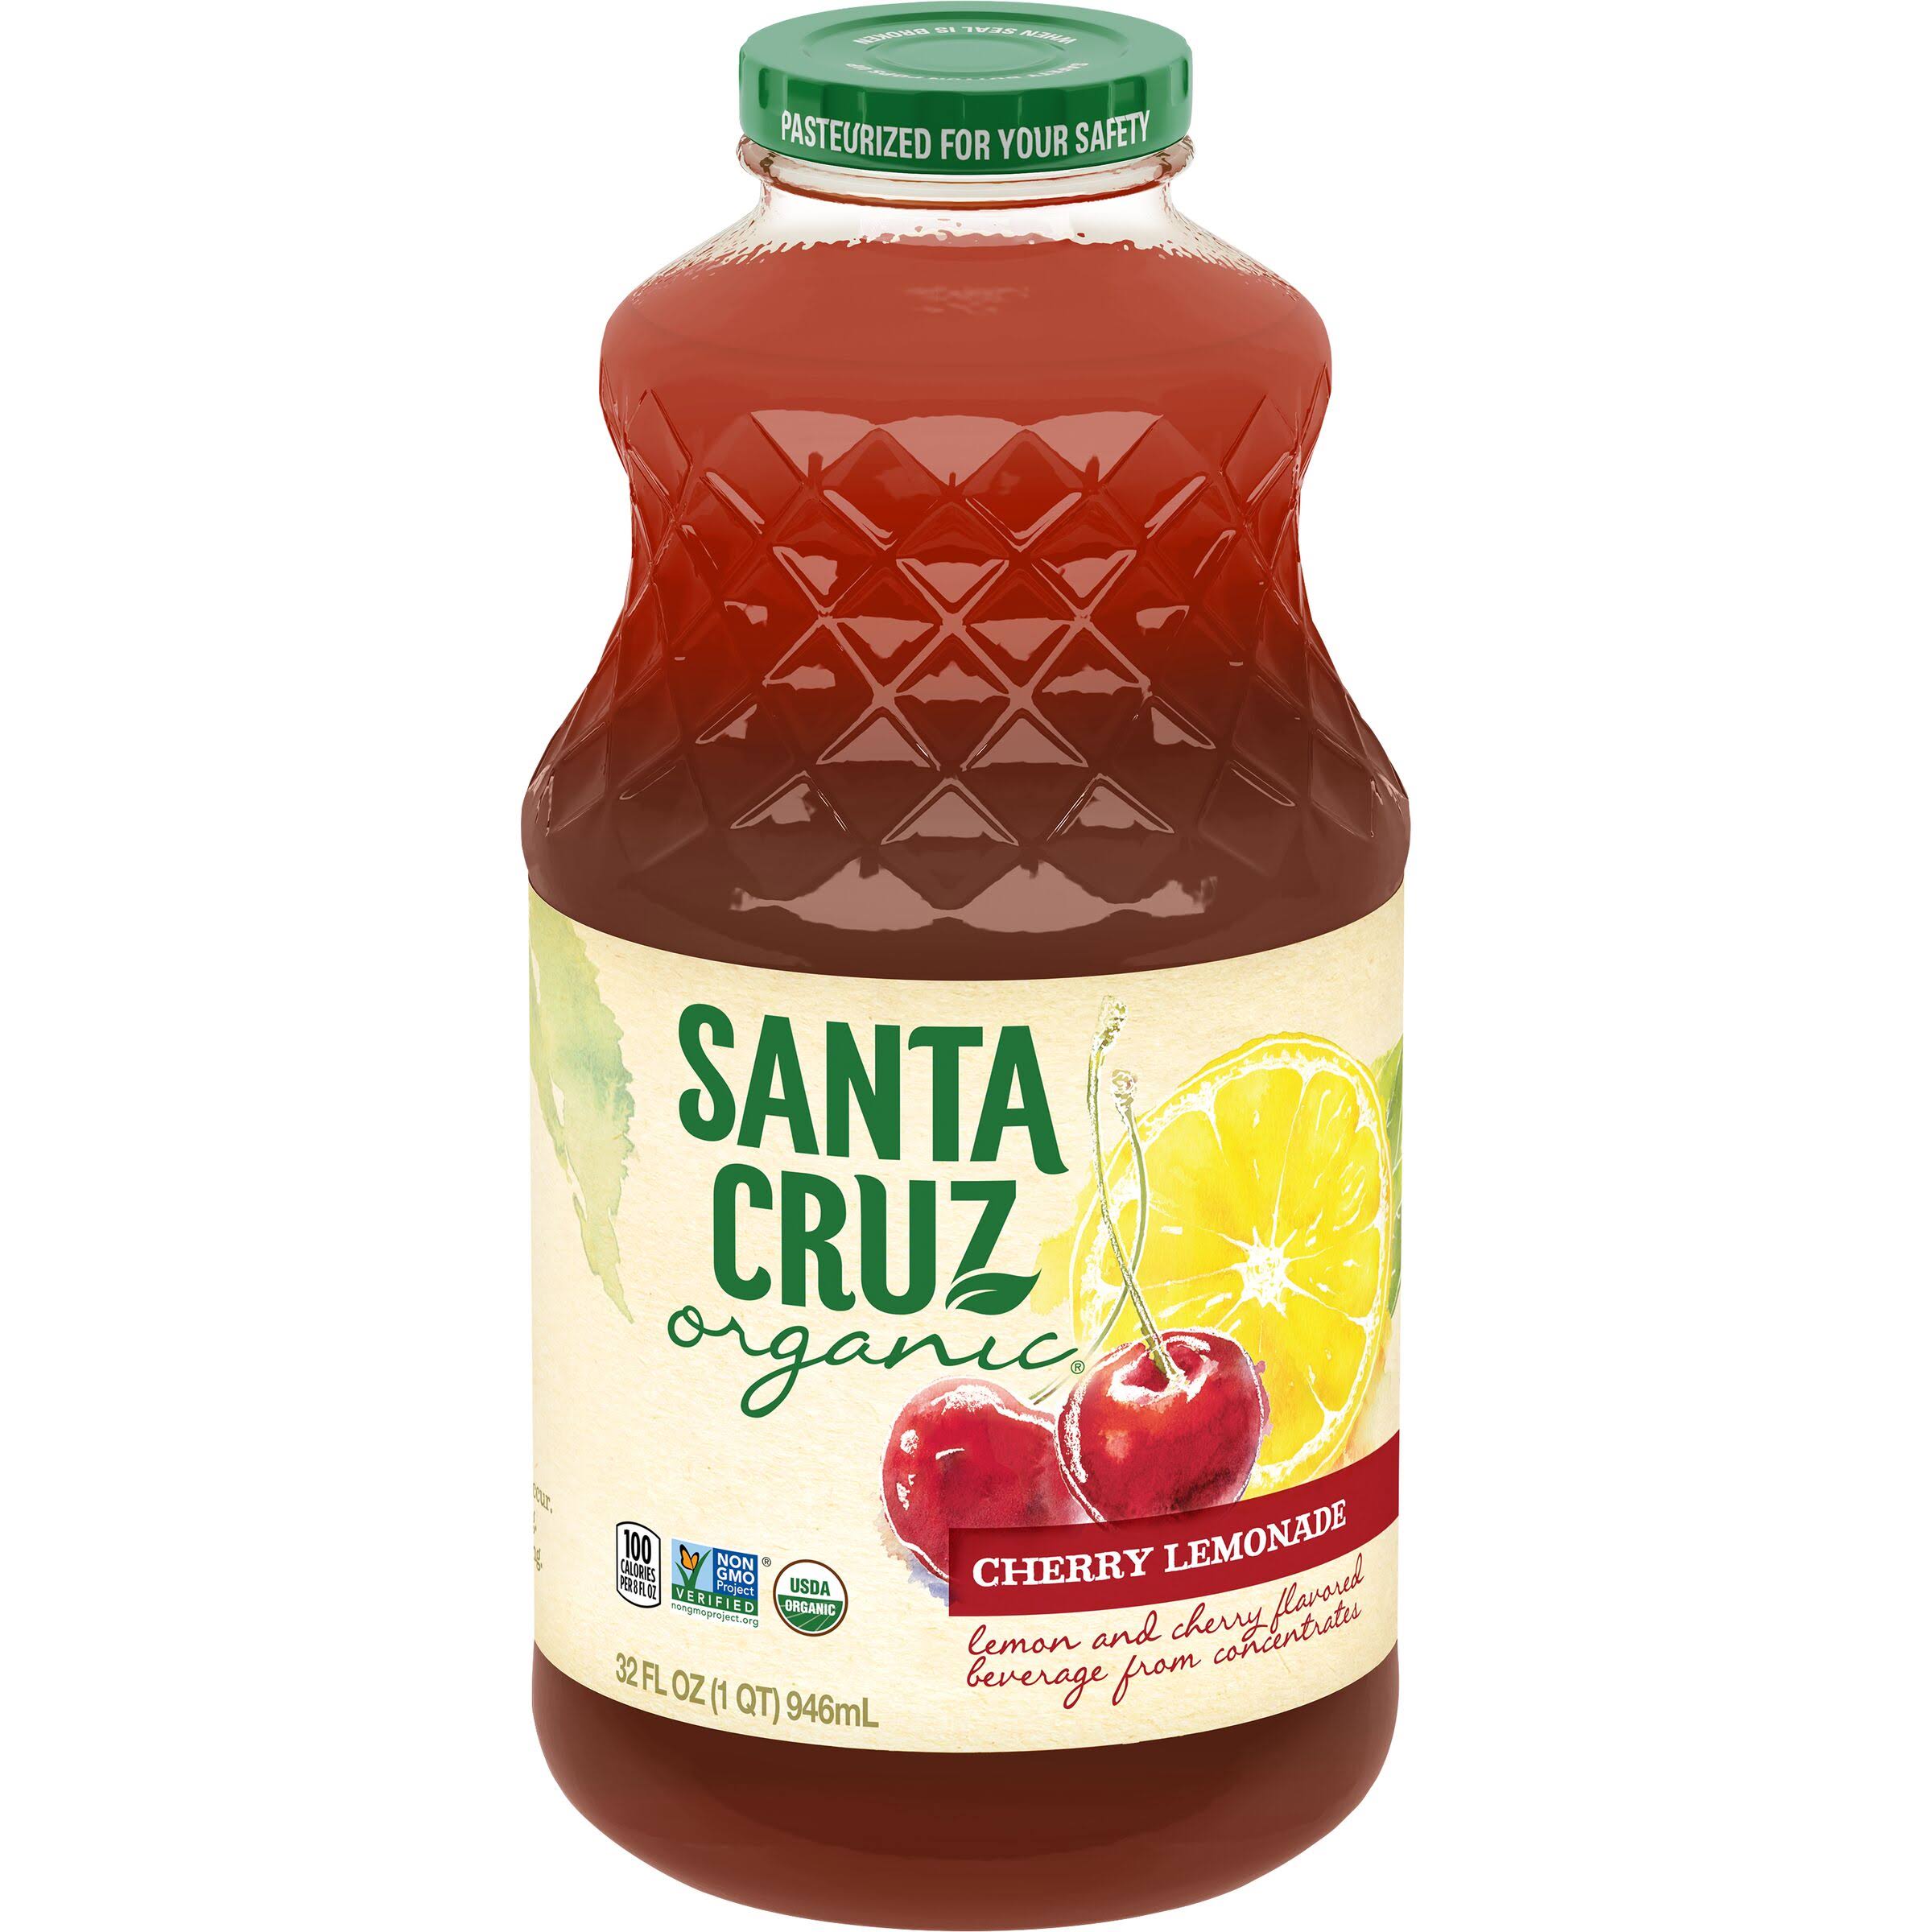 Santa Cruz Organic Juice - Cherry Lemonade, 32oz